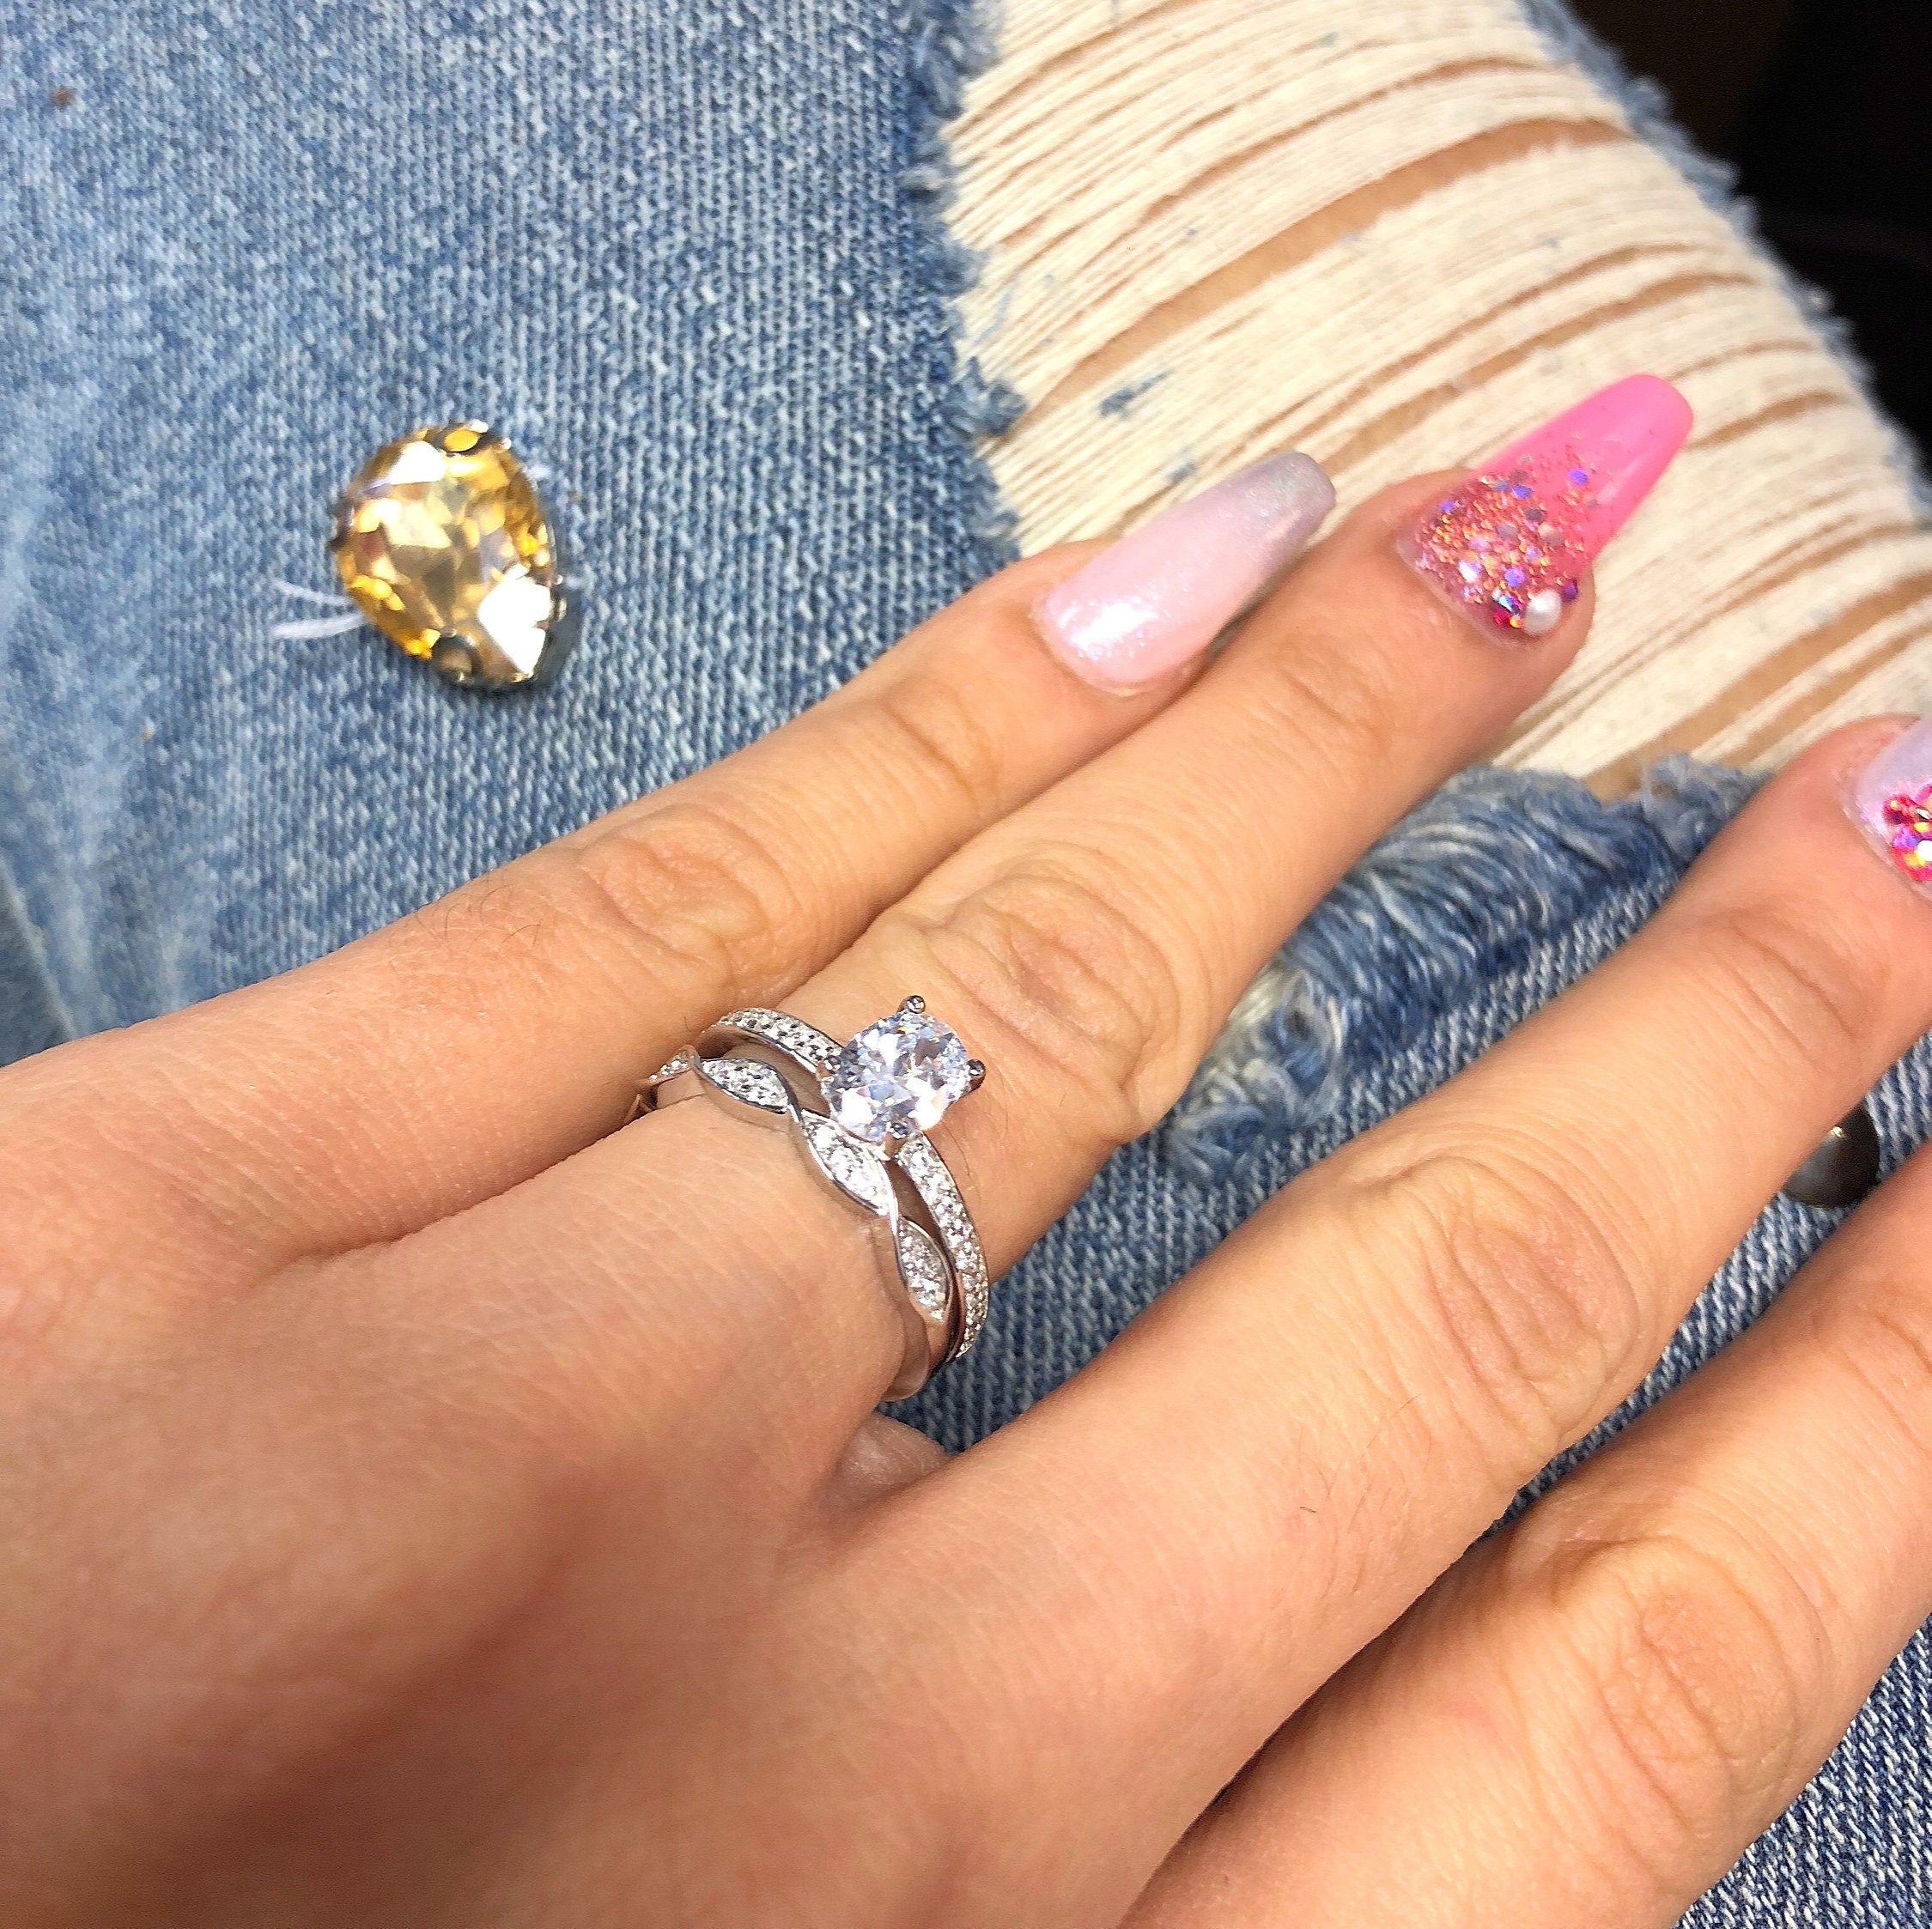 Ovalia - Engagement Ring Set, Wedding Ring,Oval Ring, Bridal Ring Set,Promise Ring, Art Deco Ring, Promise Ring, Diamond Simulant